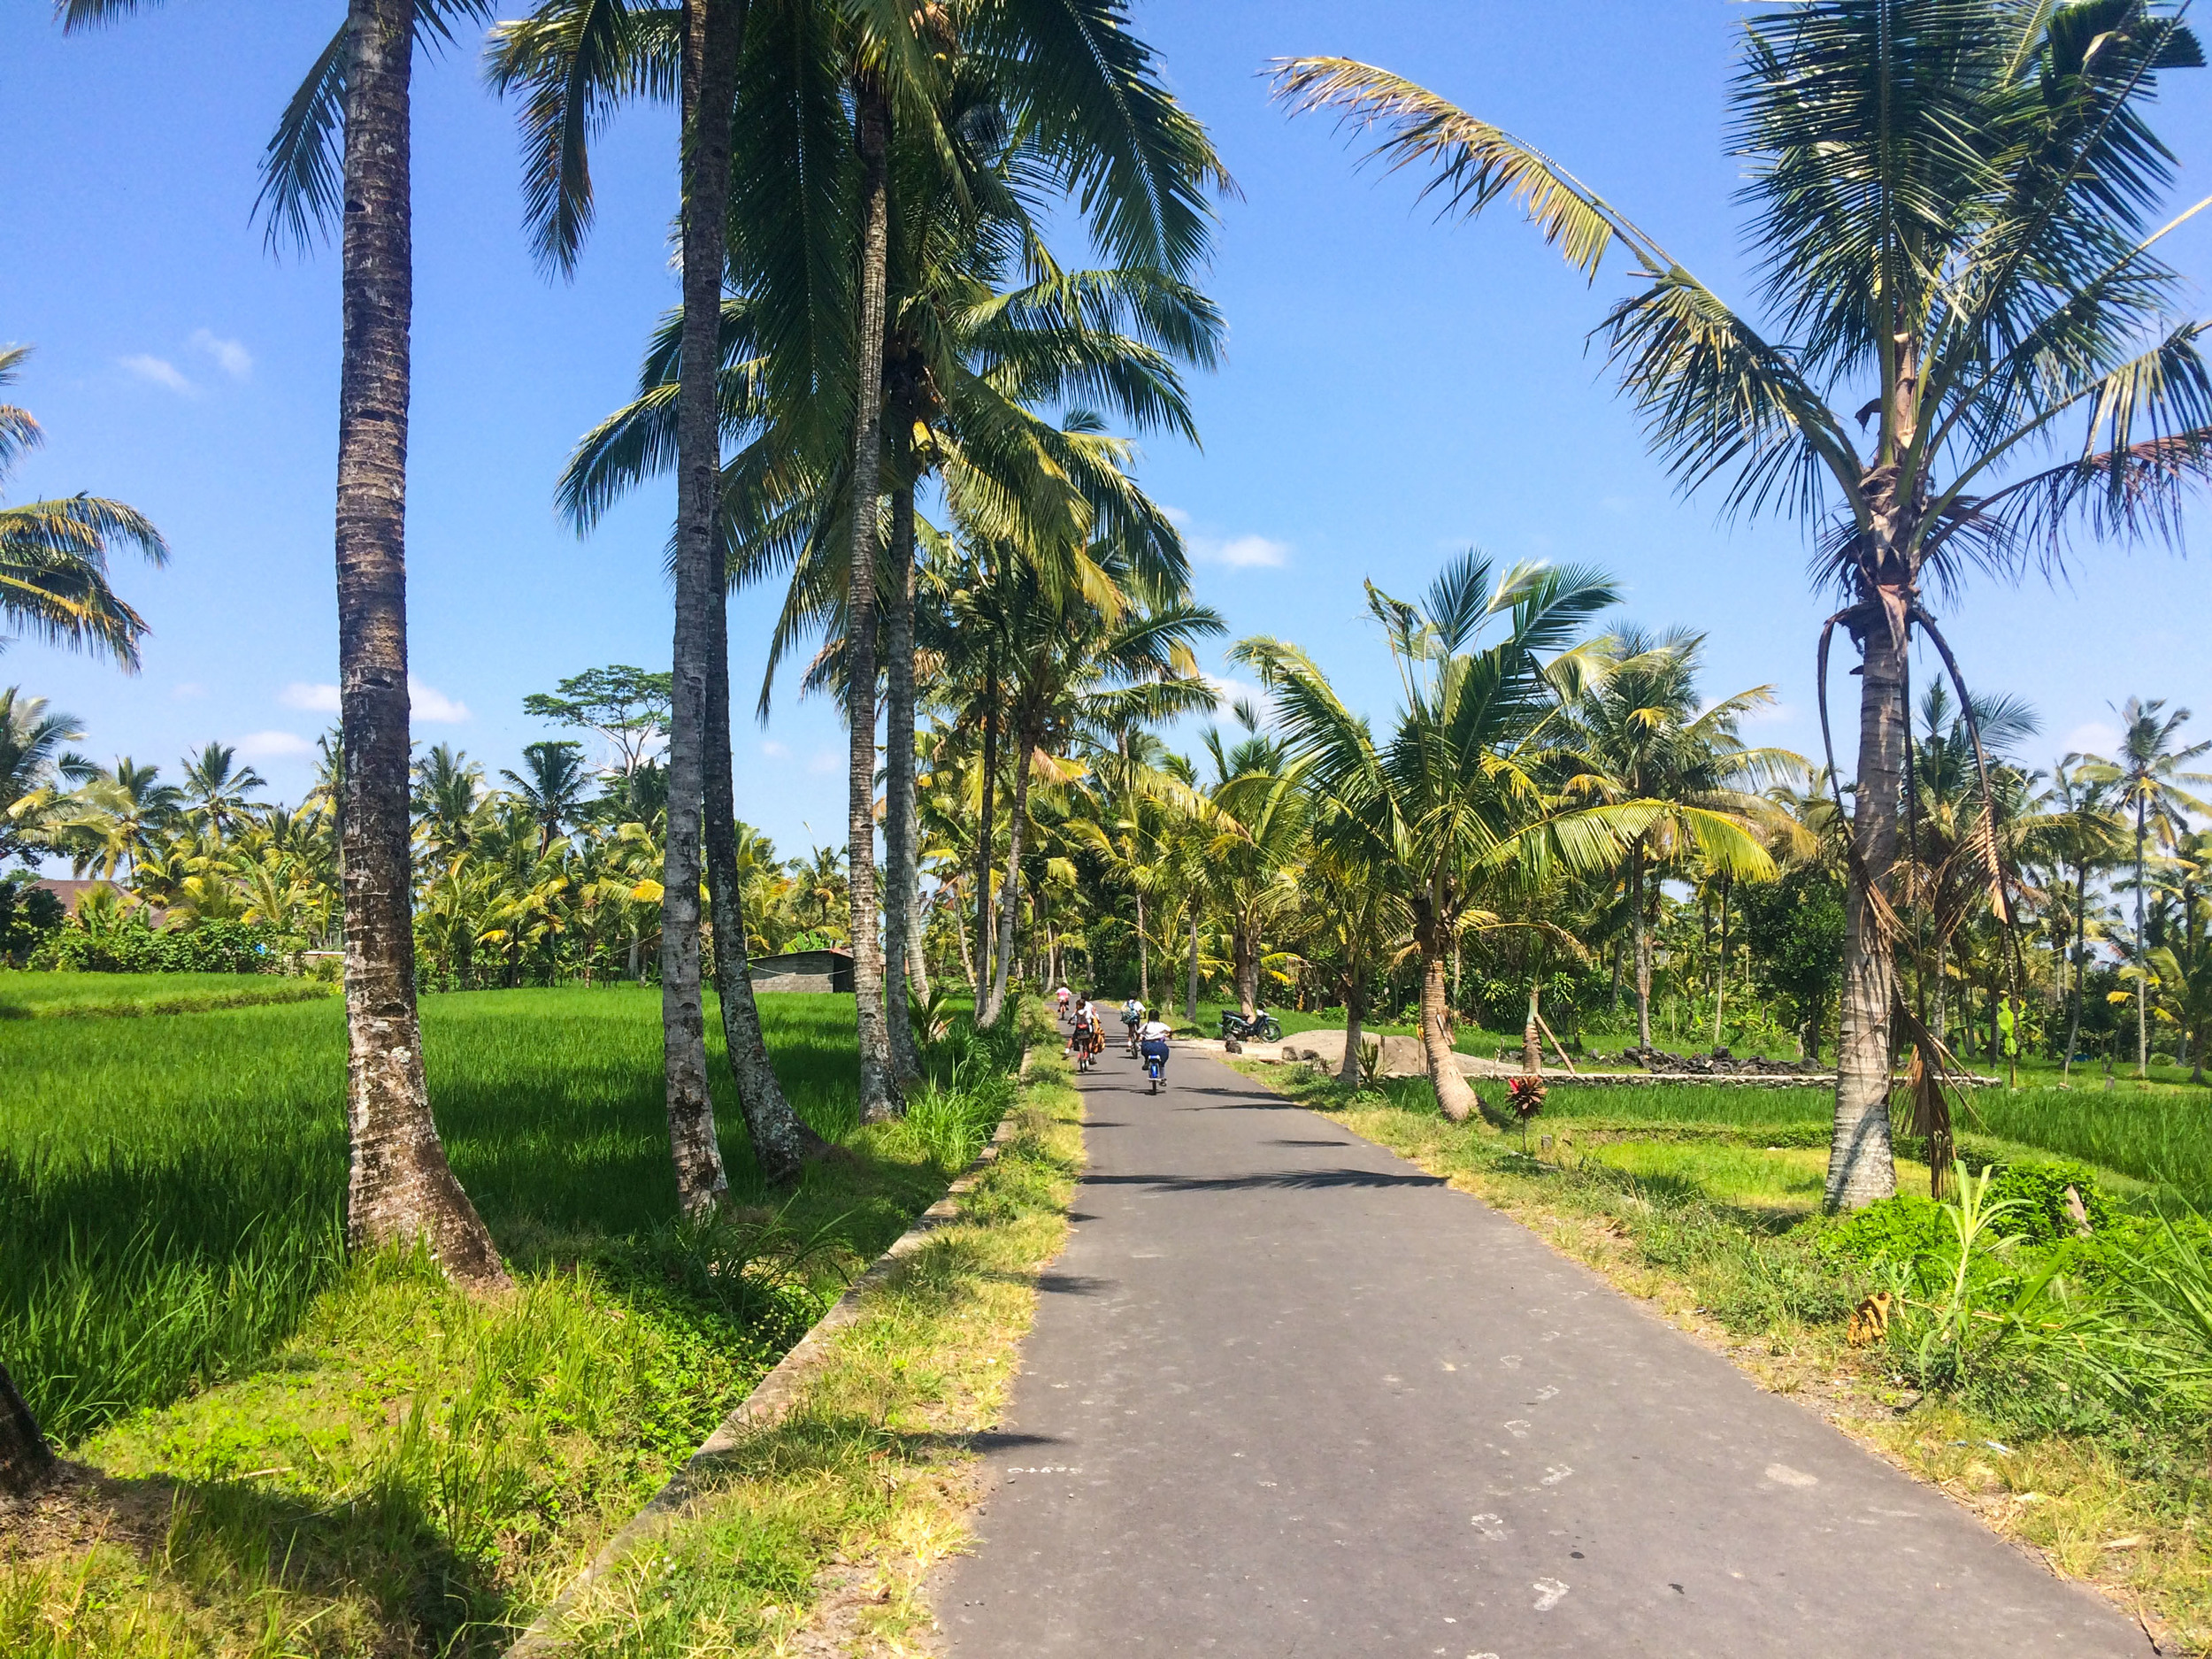 Bike ride through the villages